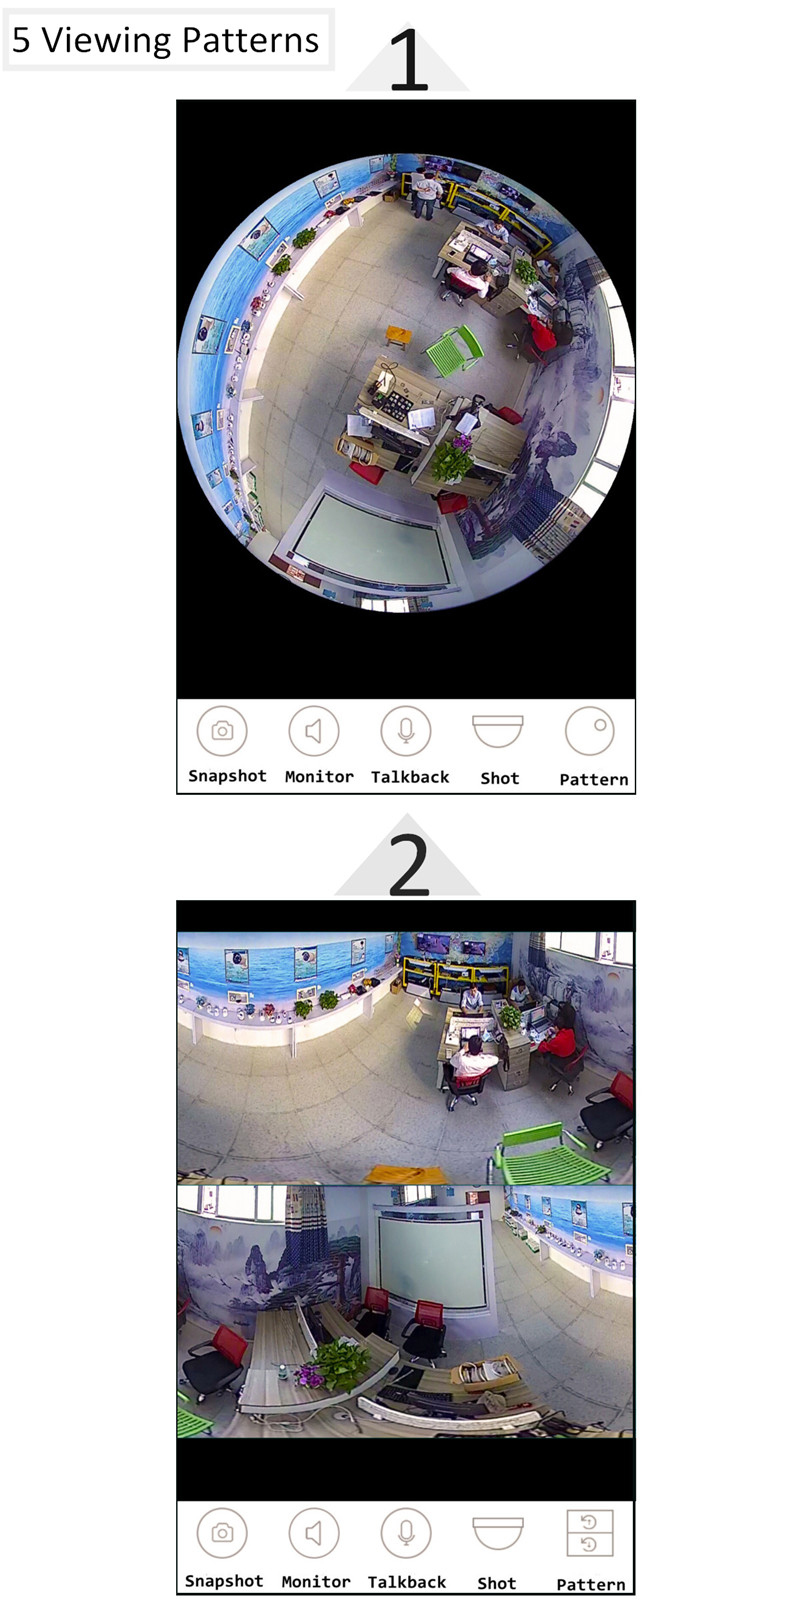 VR 360° 3D Panoramic 960P Fisheye IP Camera Wifi 1.3MP Home Security Surveillance Two Way Talk Audio 7